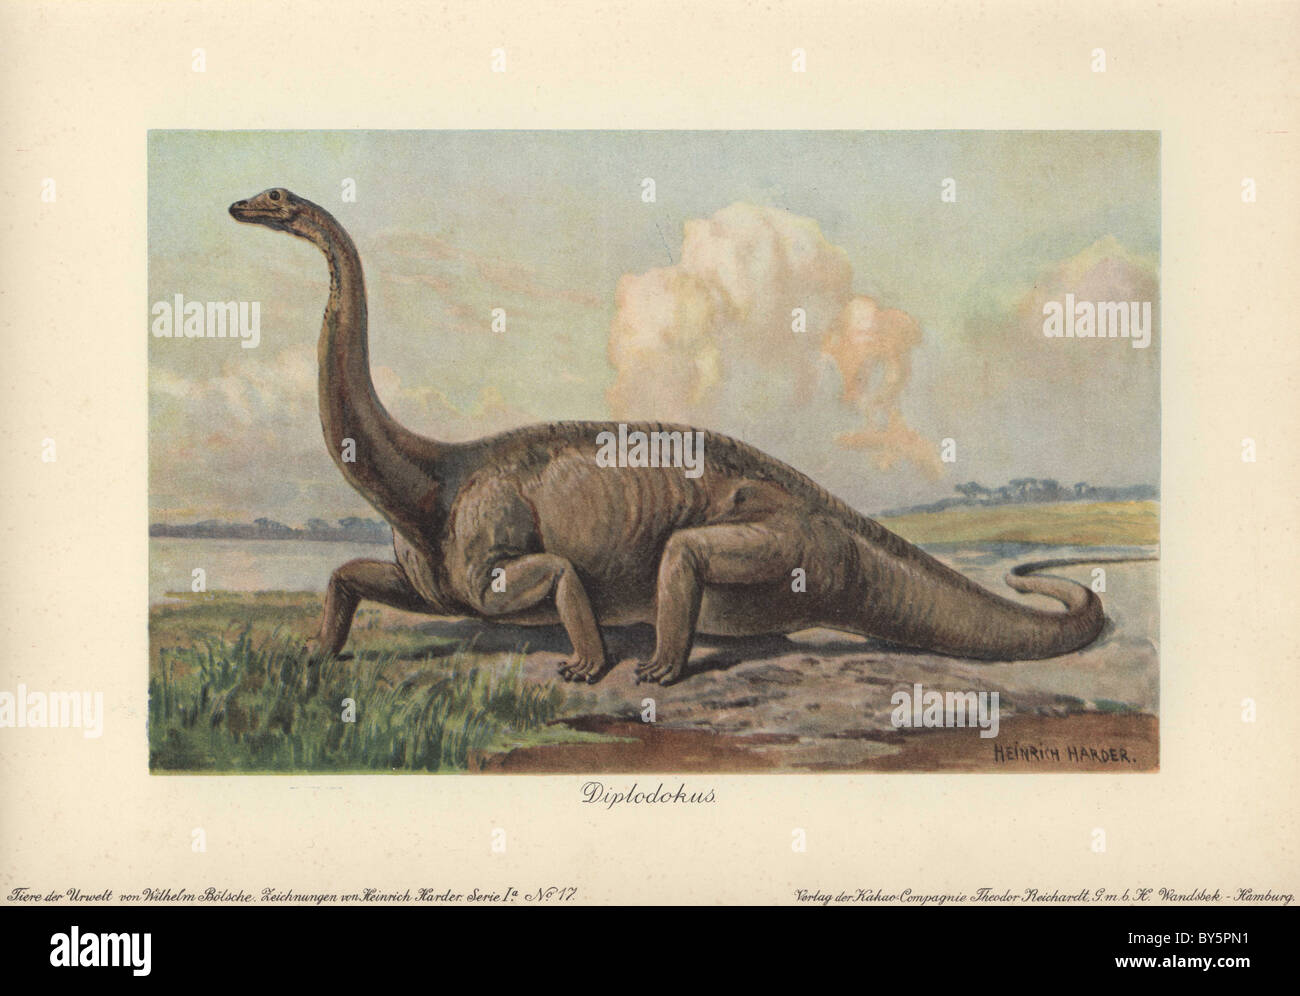 Diplodocus is a genus of extinct diplodocid sauropod dinosaur of the Late Jurassic period. Stock Photo